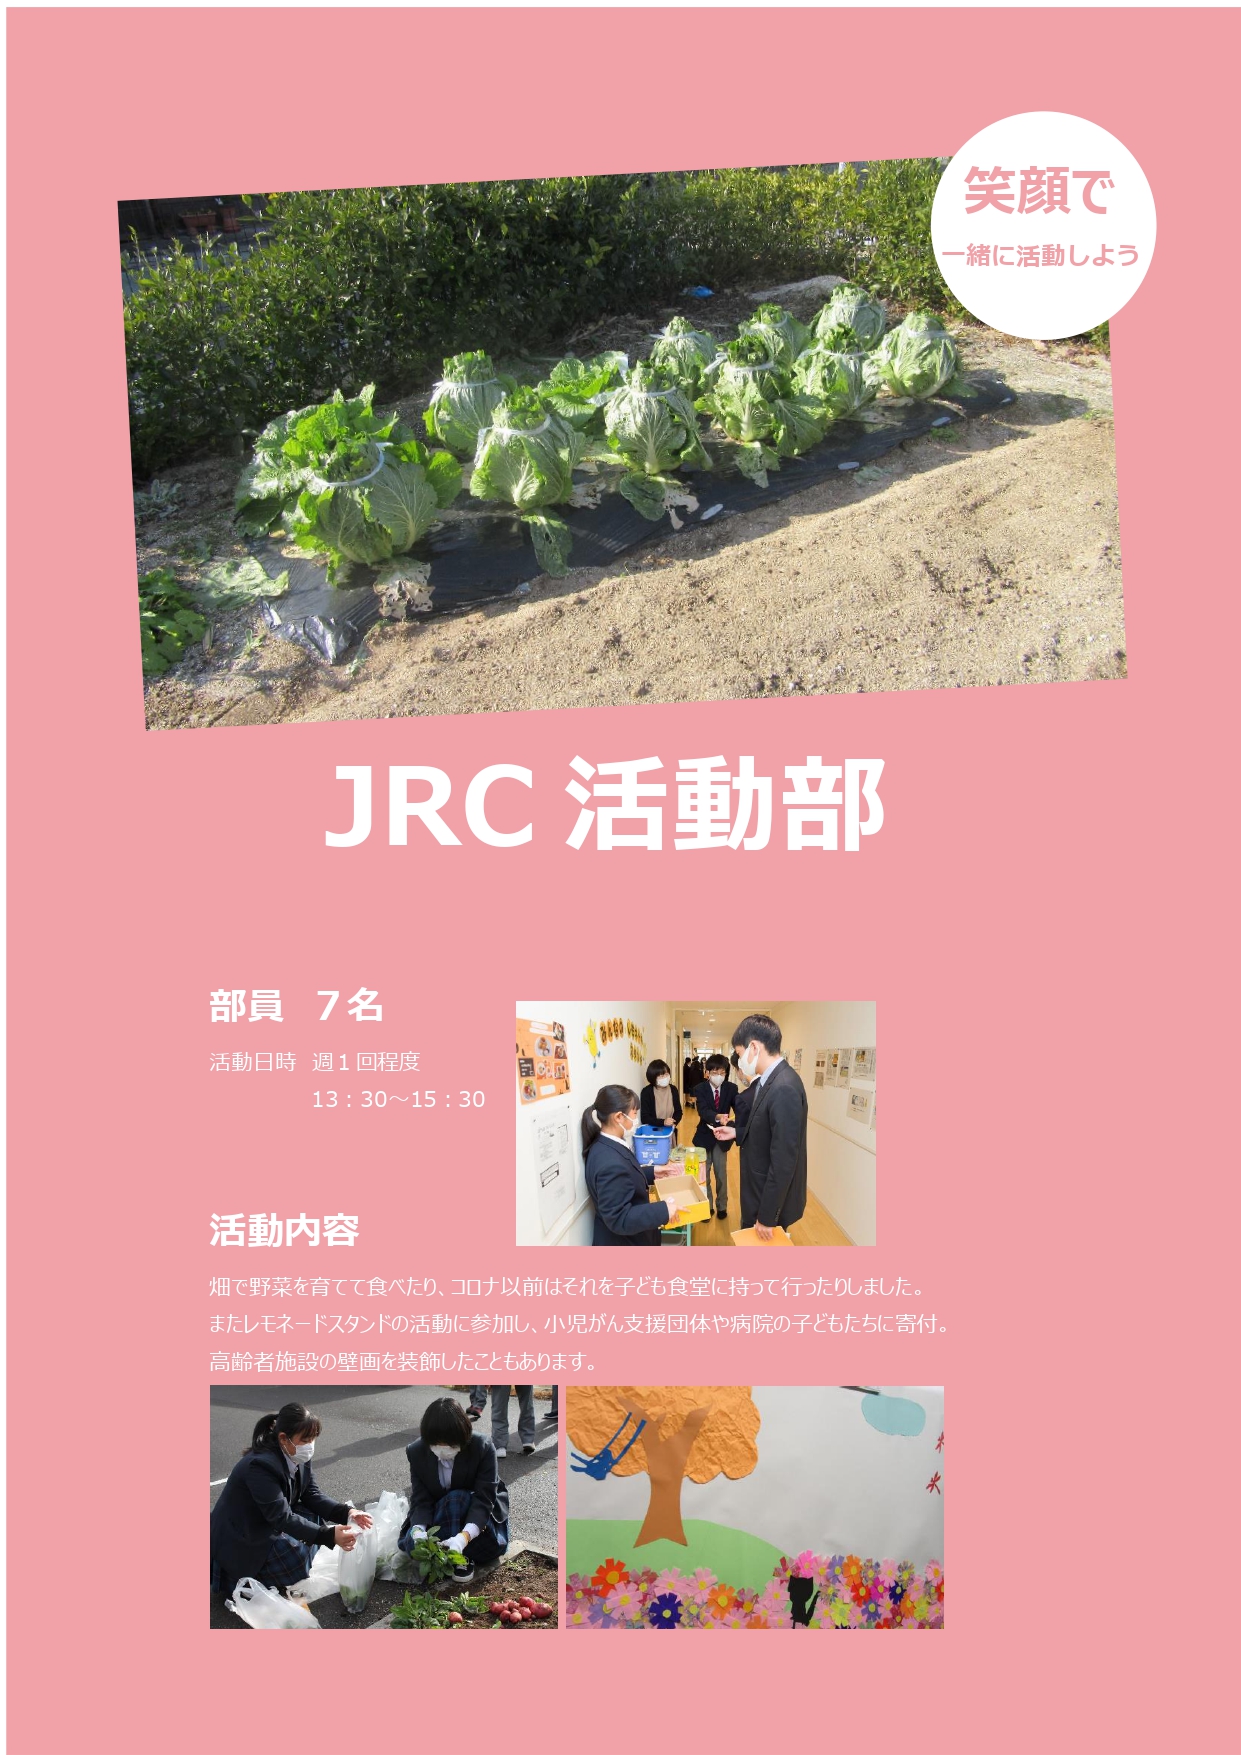 JRC活動部_page-0001 (1).jpg